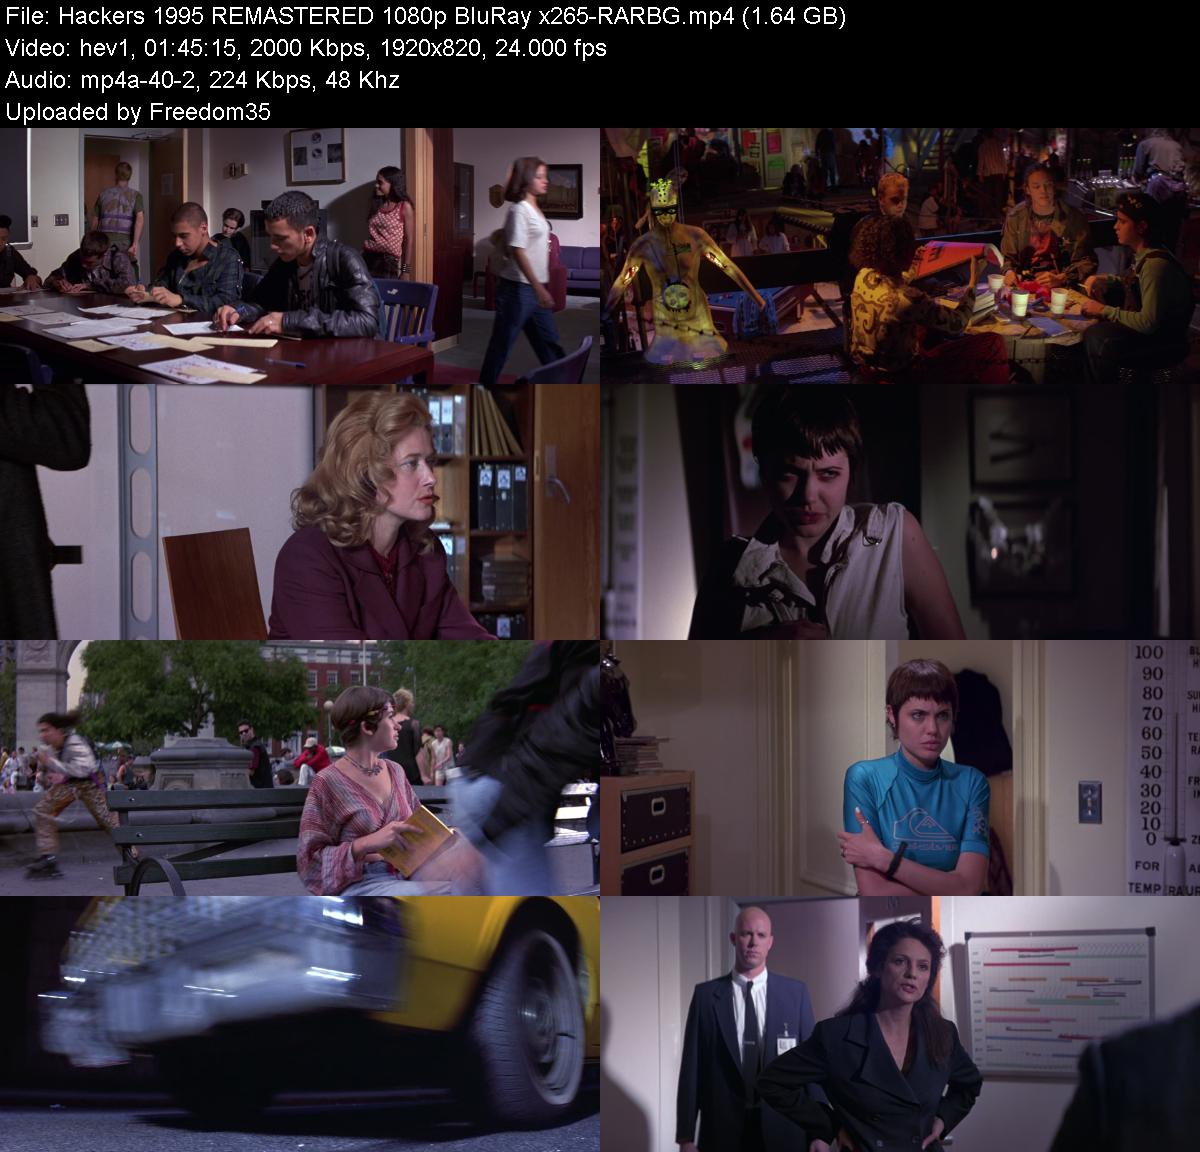 Hackers-1995-REMASTERED-1080p-Blu-Ray-x2